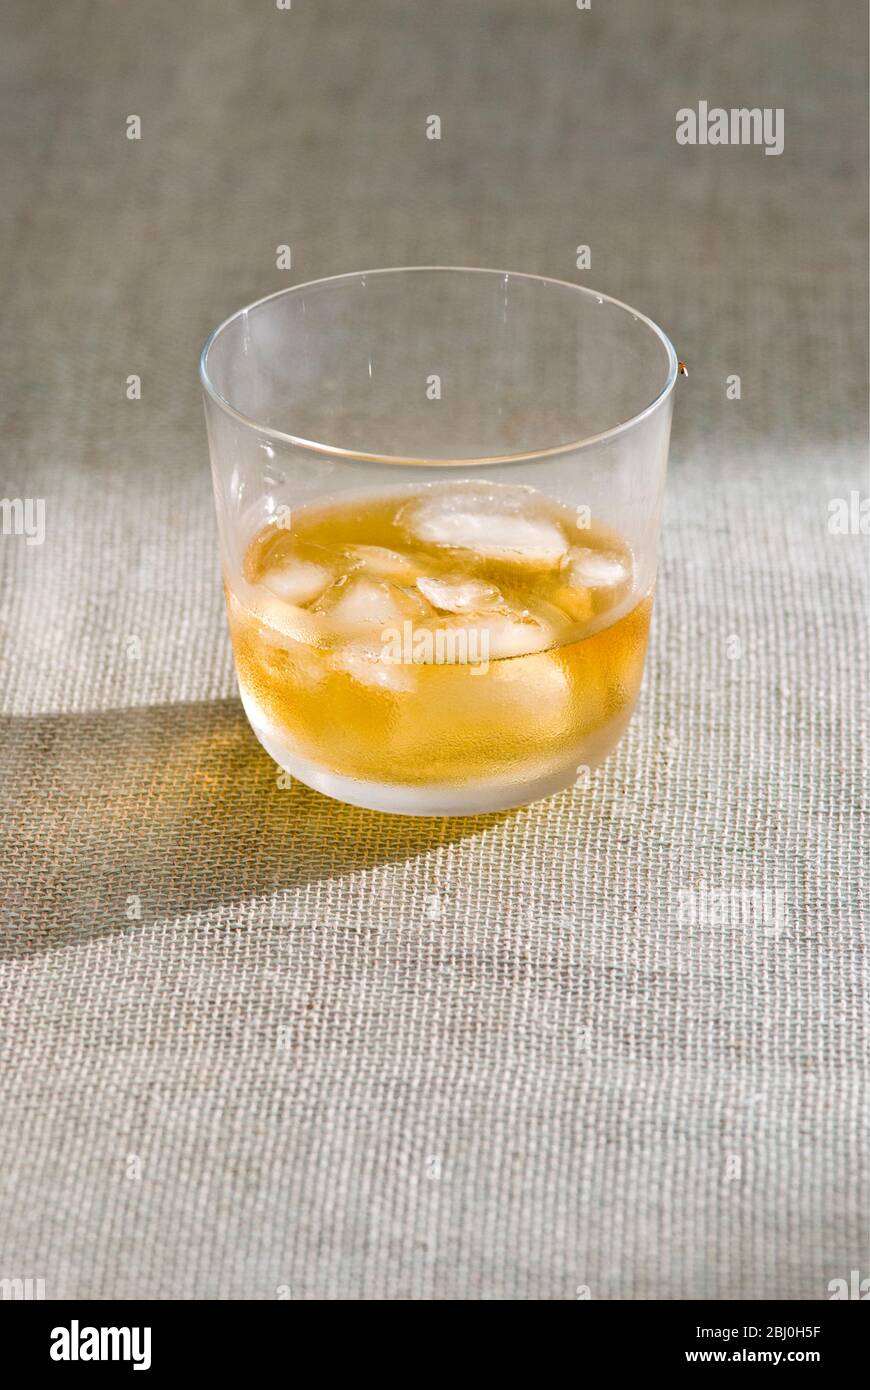 Glas Whisky mit Eis auf rauem hessischem Tuch - Stockfoto